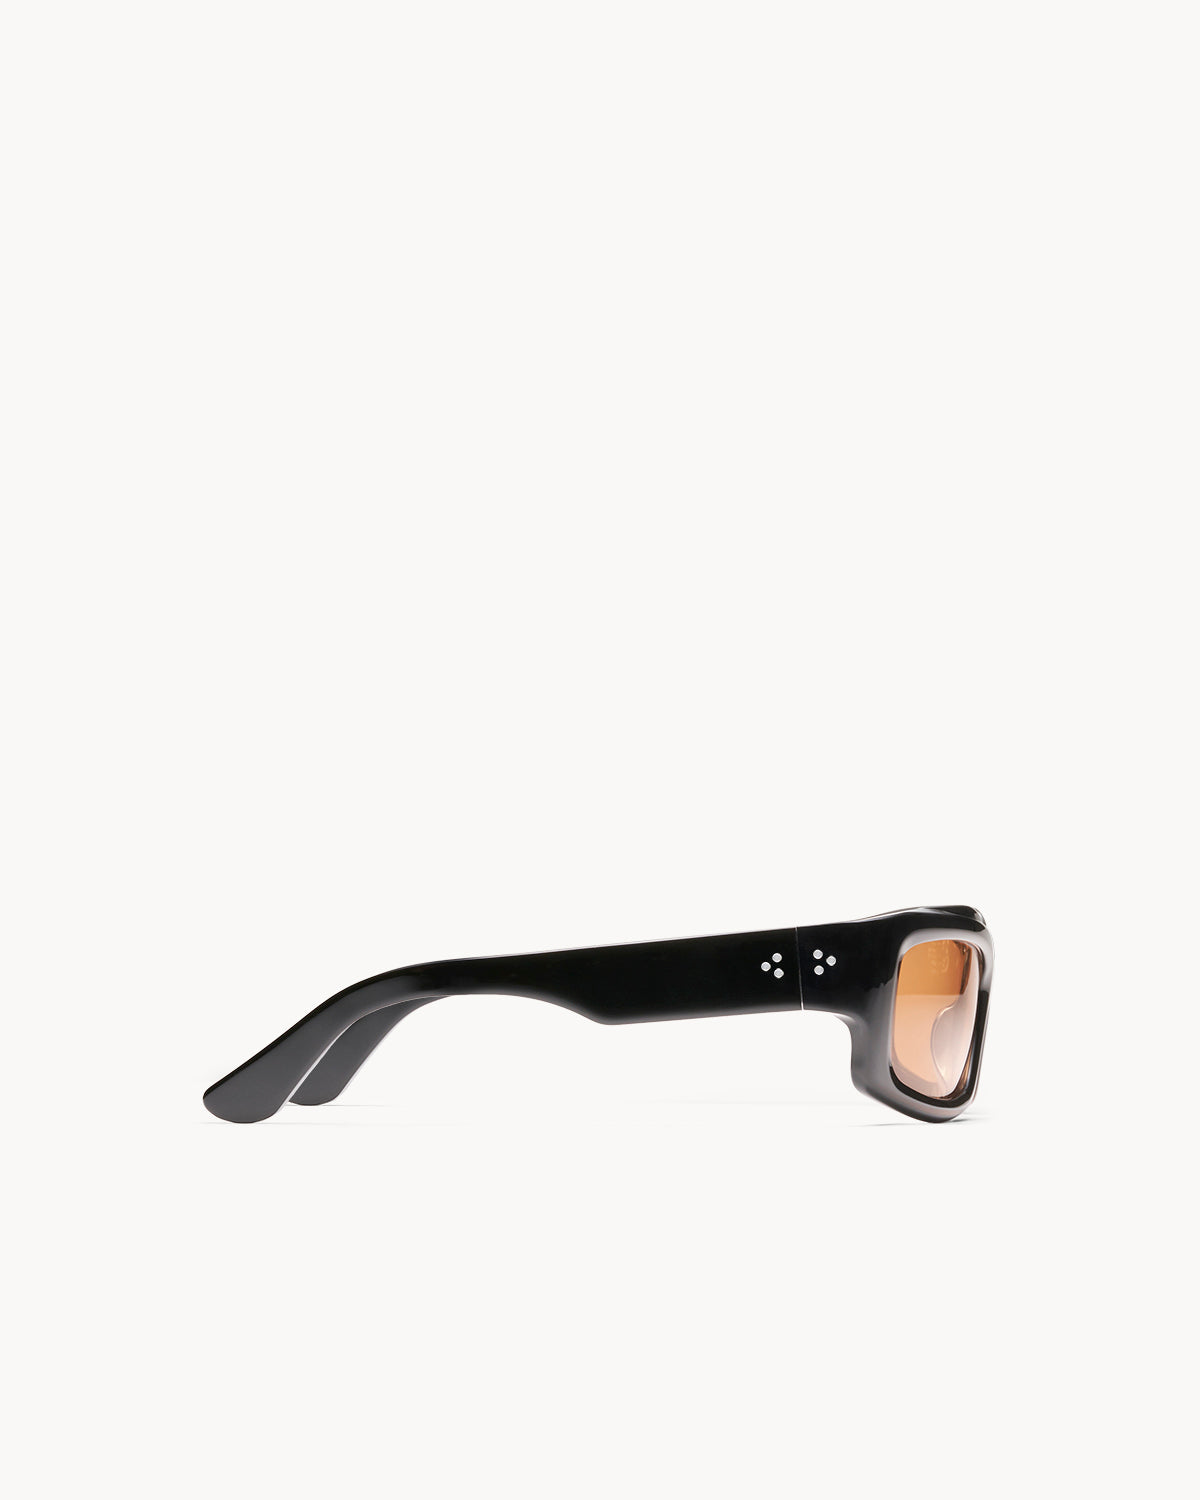 Port Tanger Addis Sunglasses in Black Acetate and Amber Lenses 4